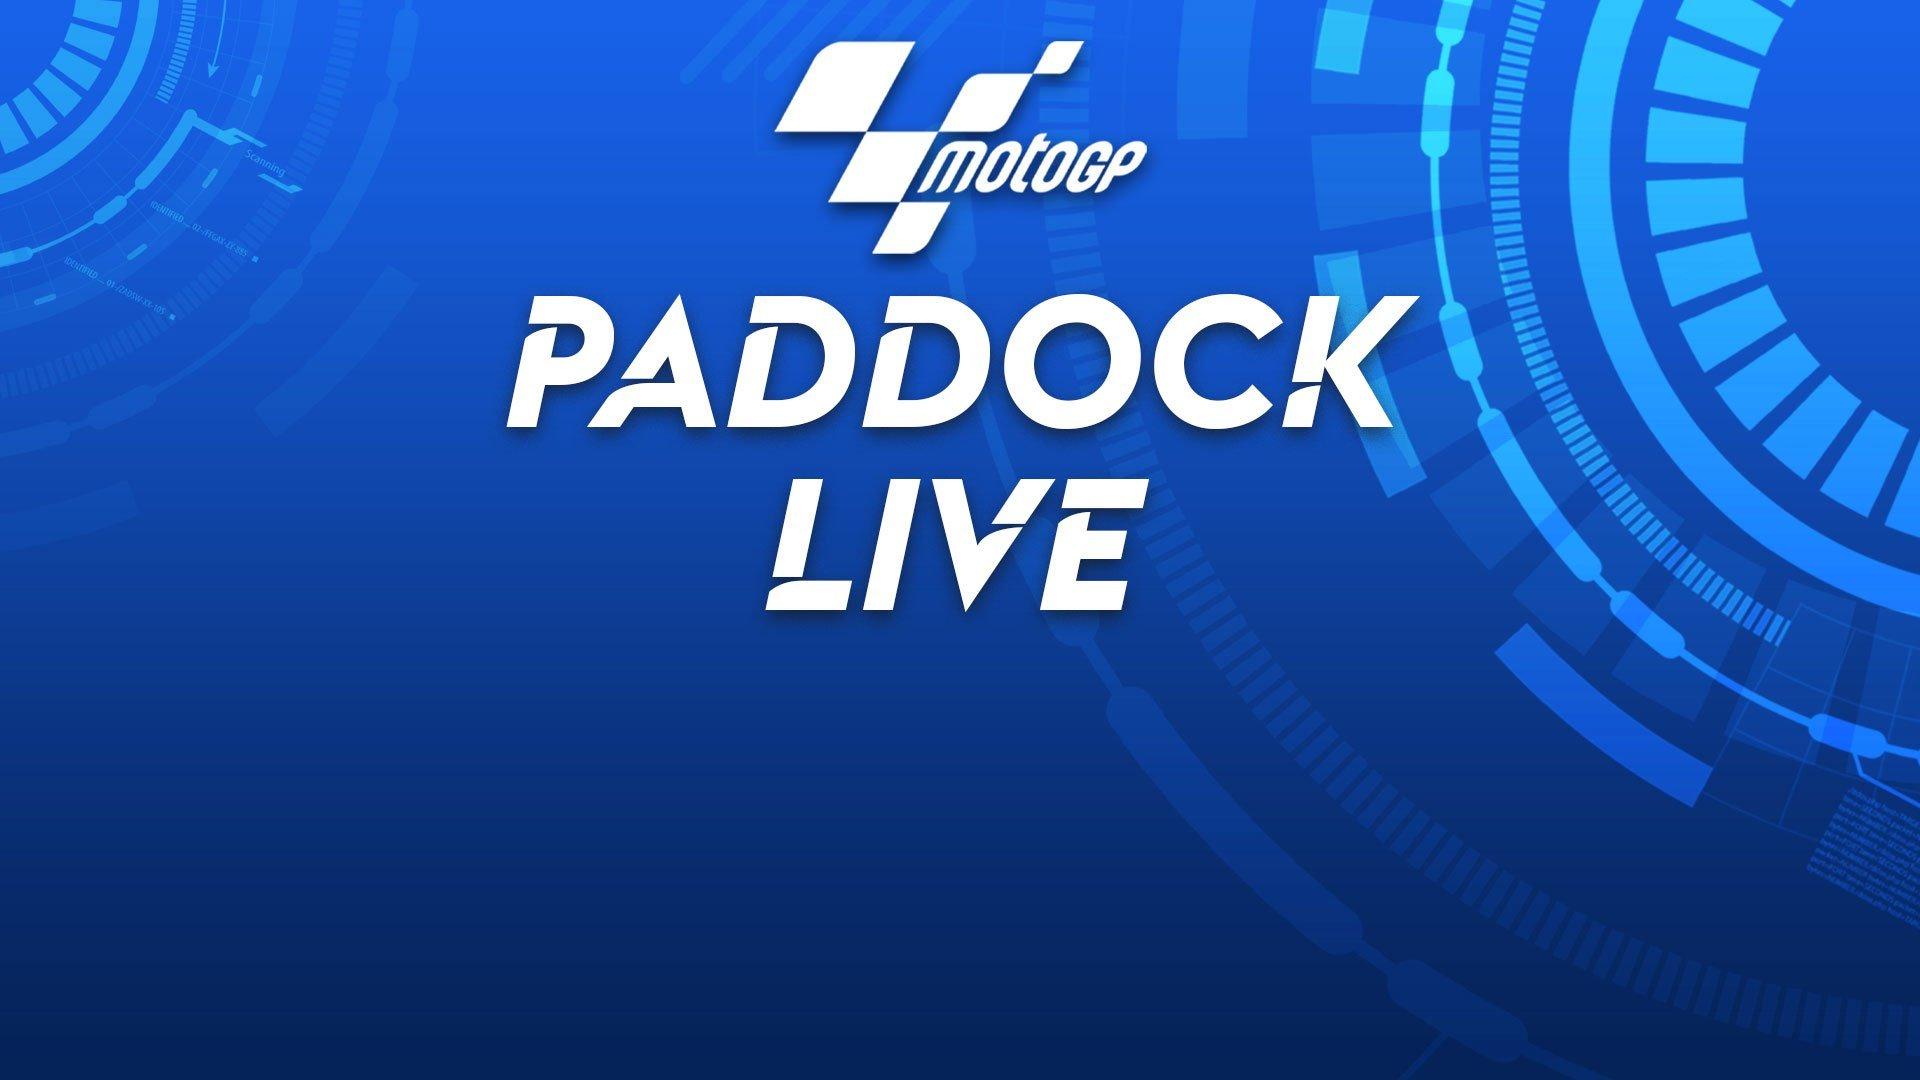 Paddock Live